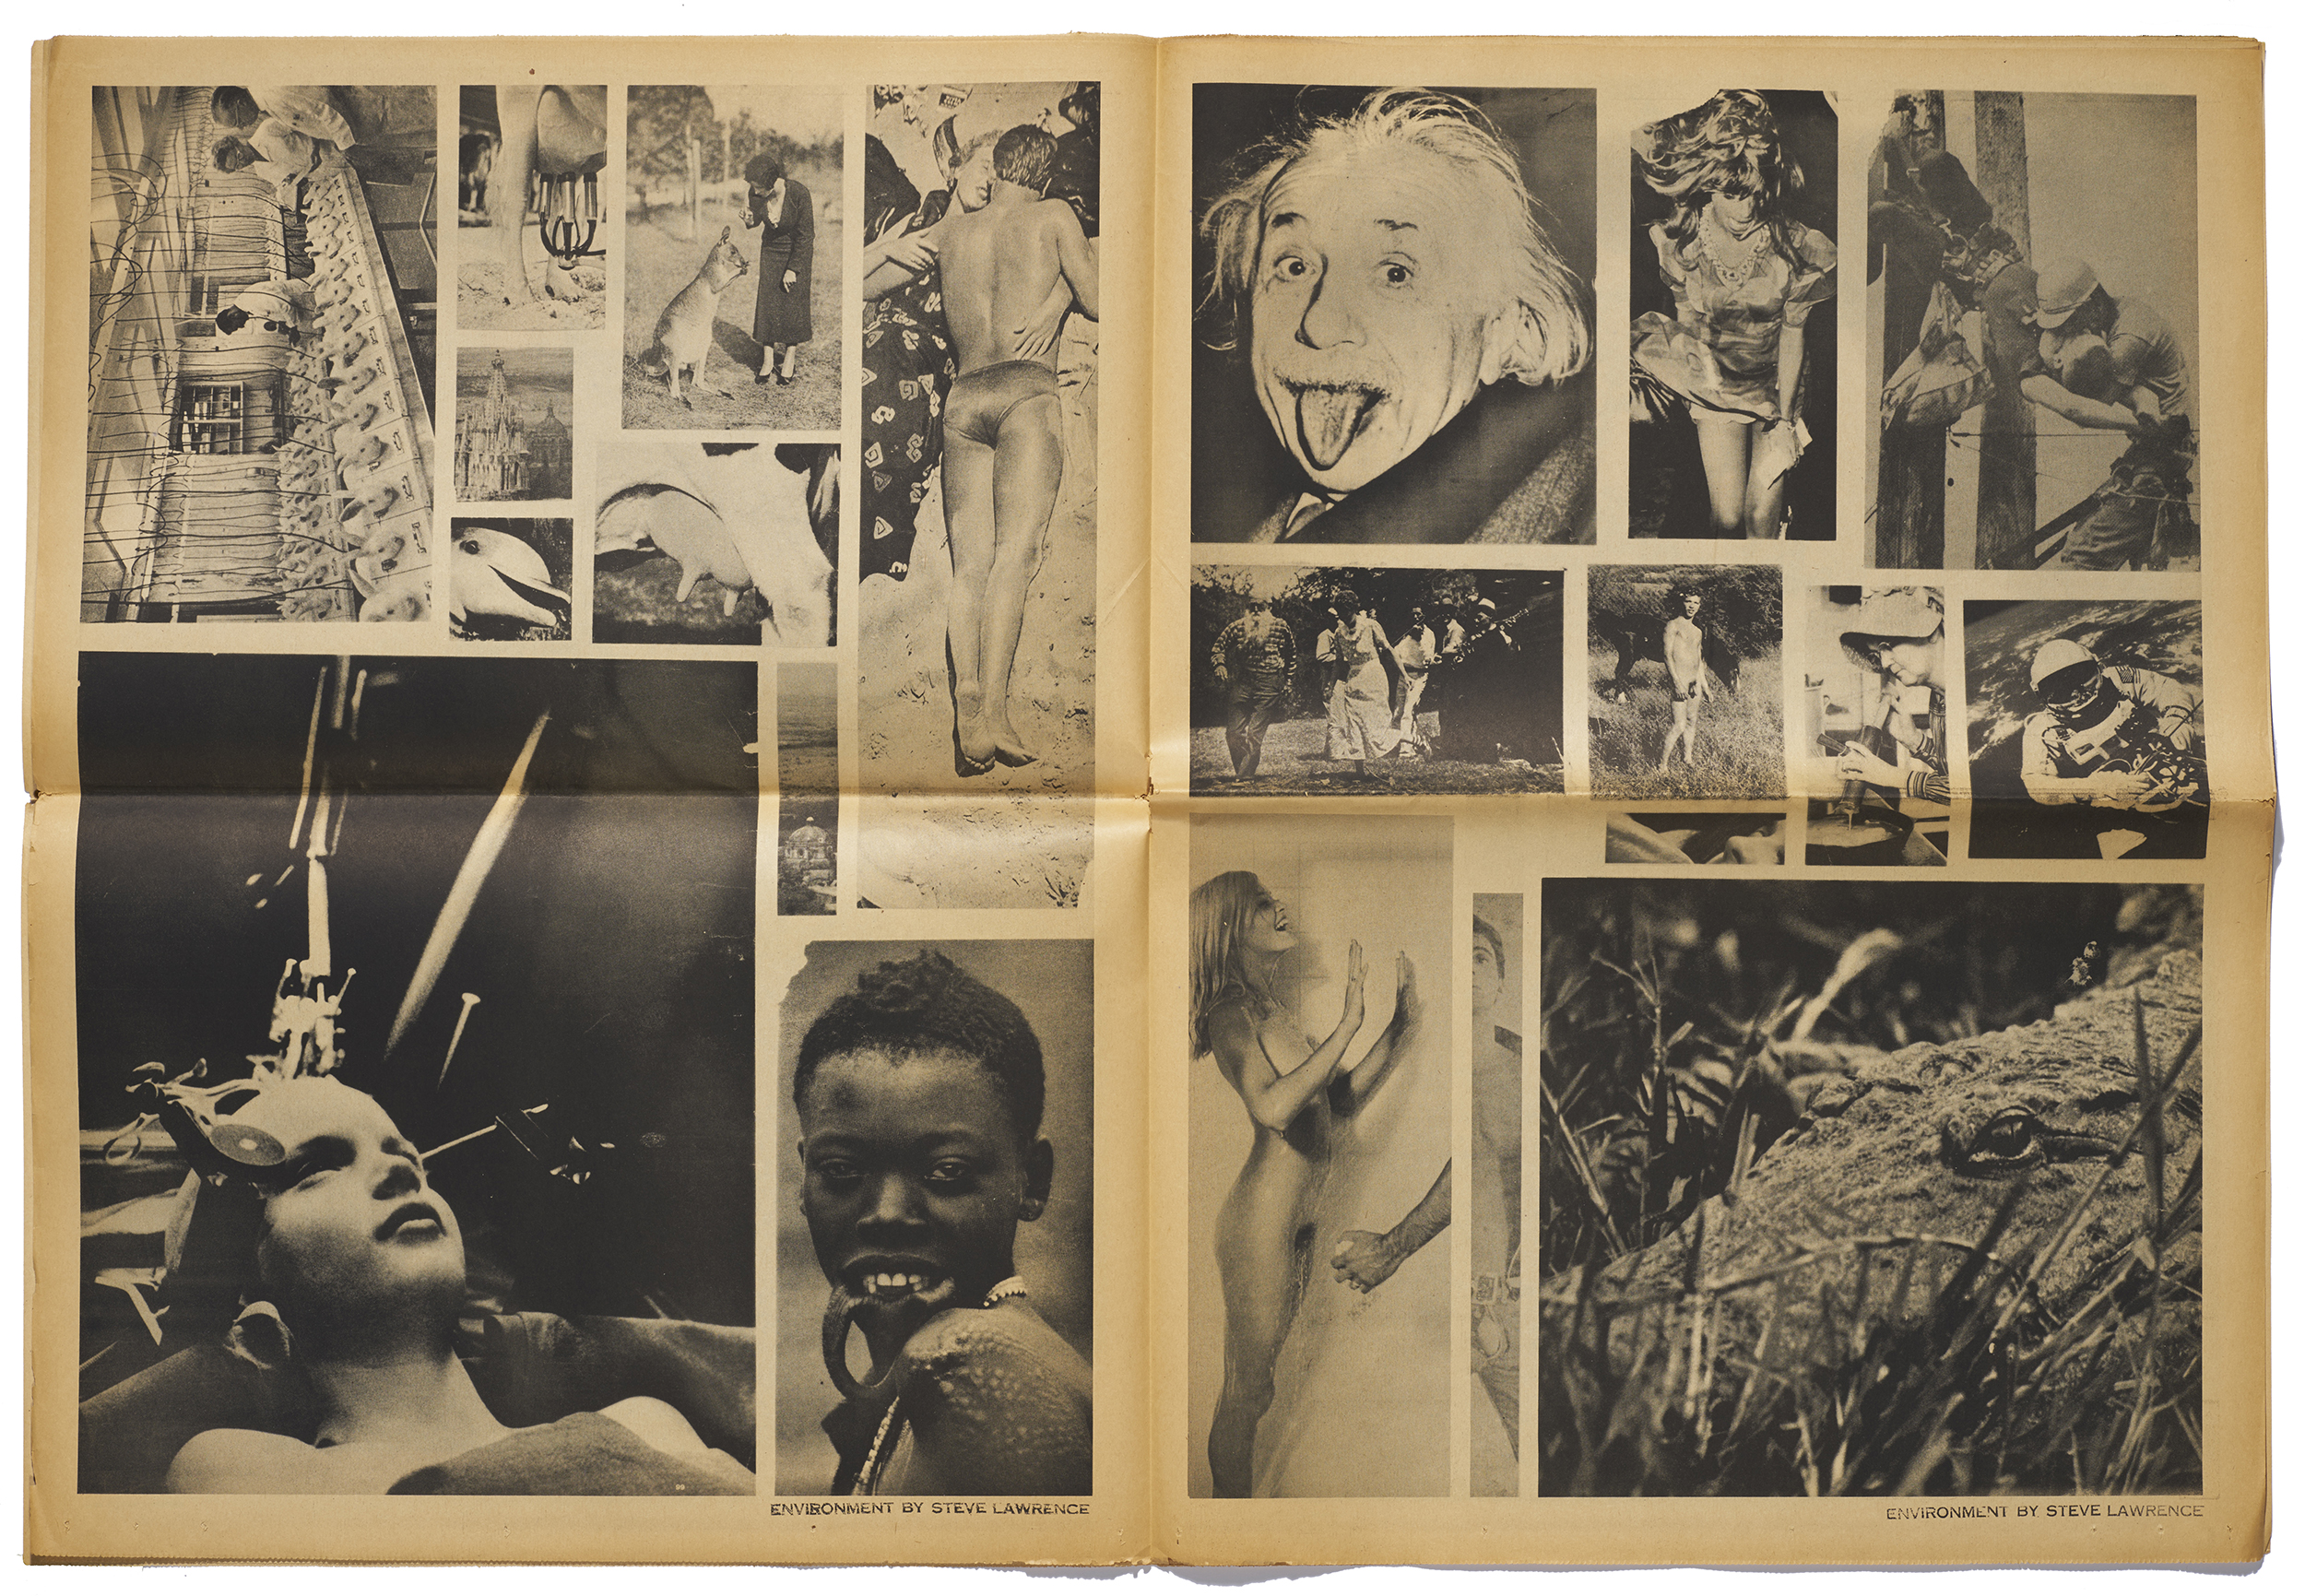 Peter Hujar ; montage ; Environnement ; Tableau ; association ; collage ; Steve Lawrence ; Newspaper ; New York ; 1969